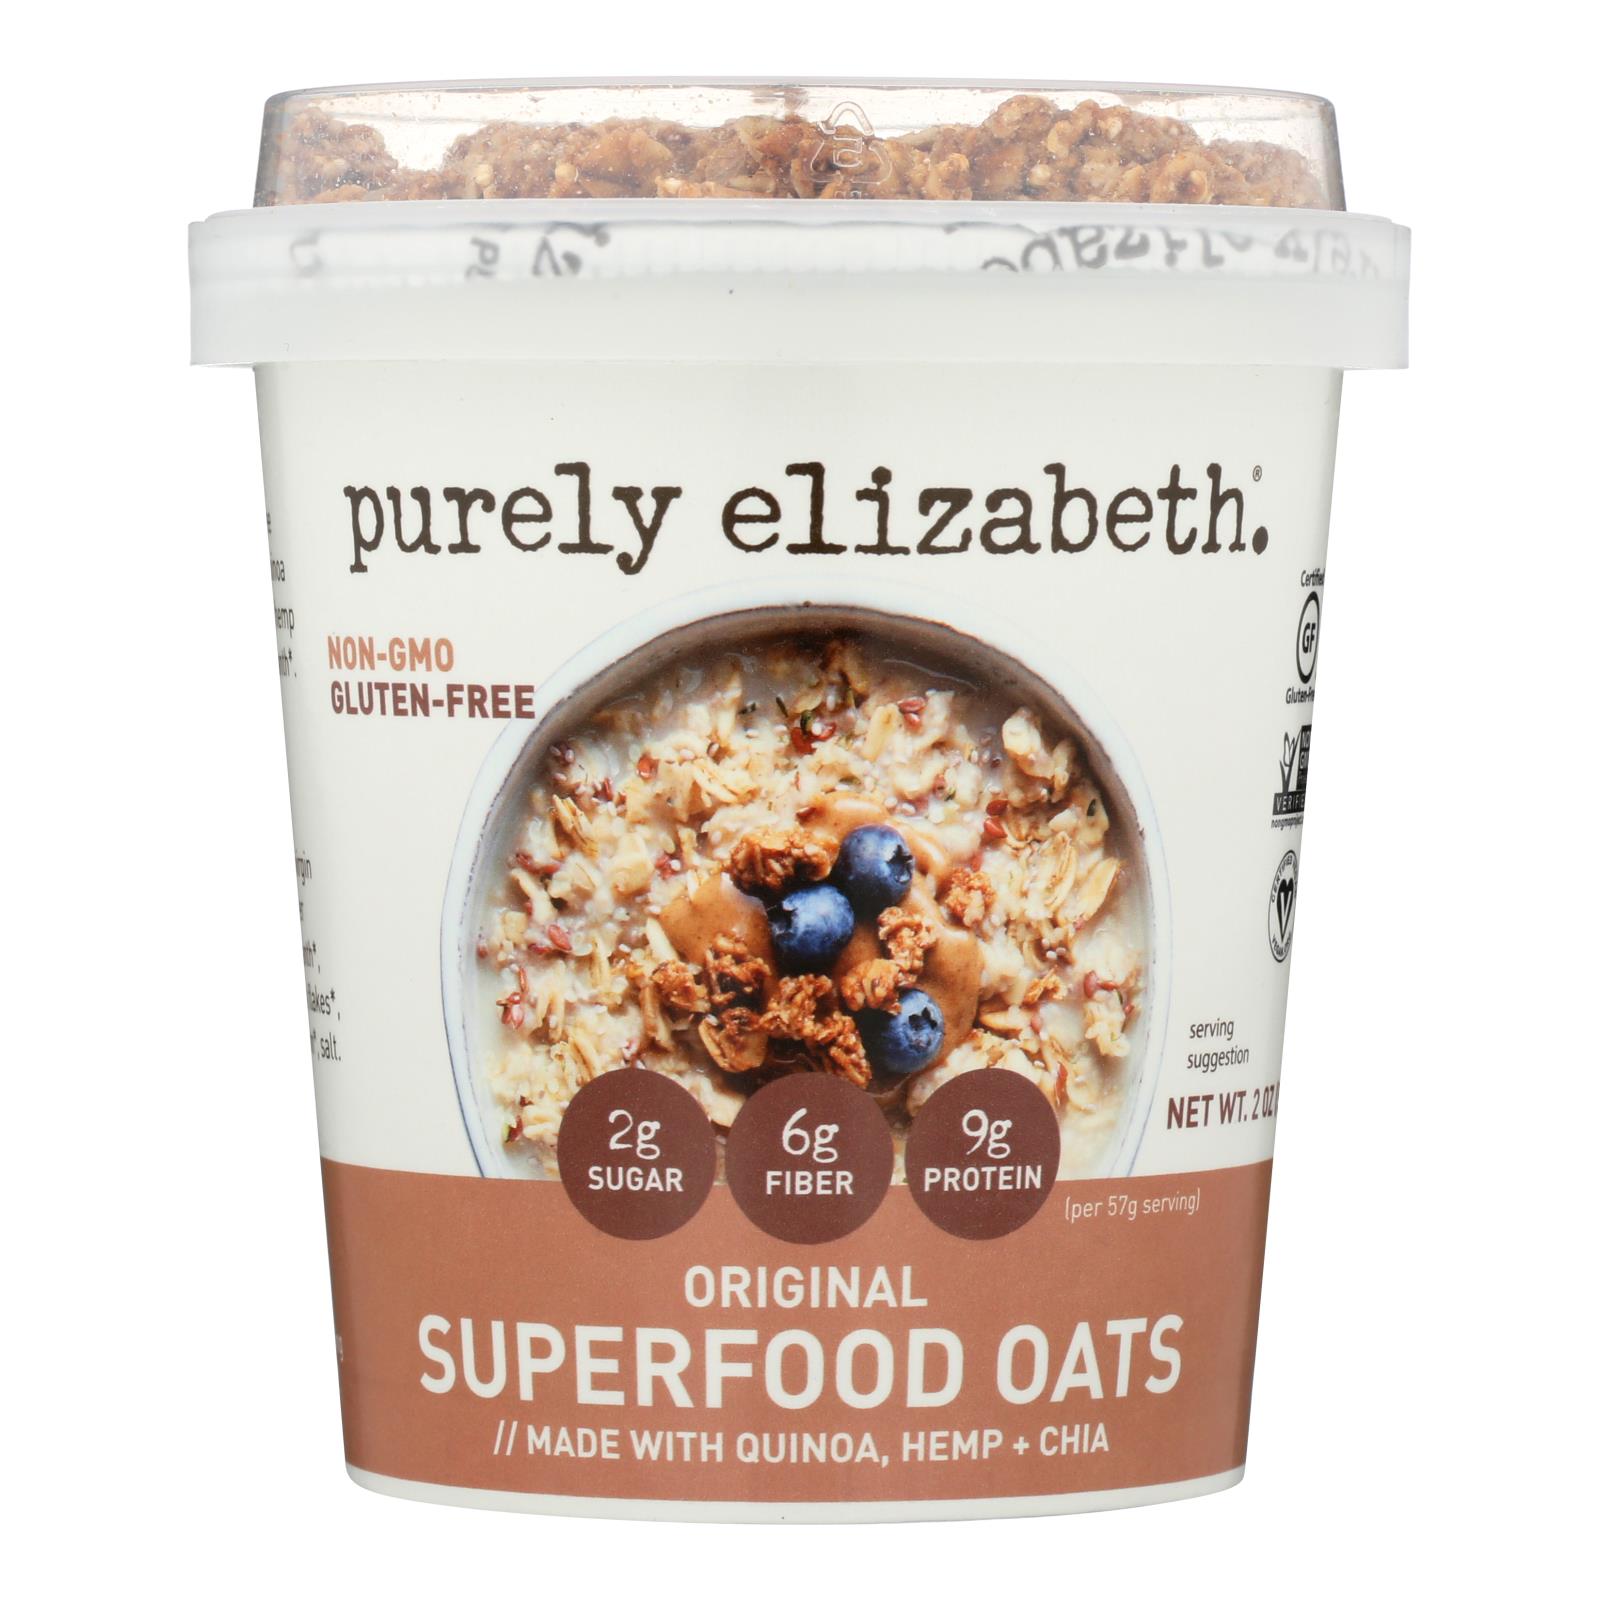 Purely Elizabeth. Original Superfood Oats - 12개 묶음상품 - 2 OZ